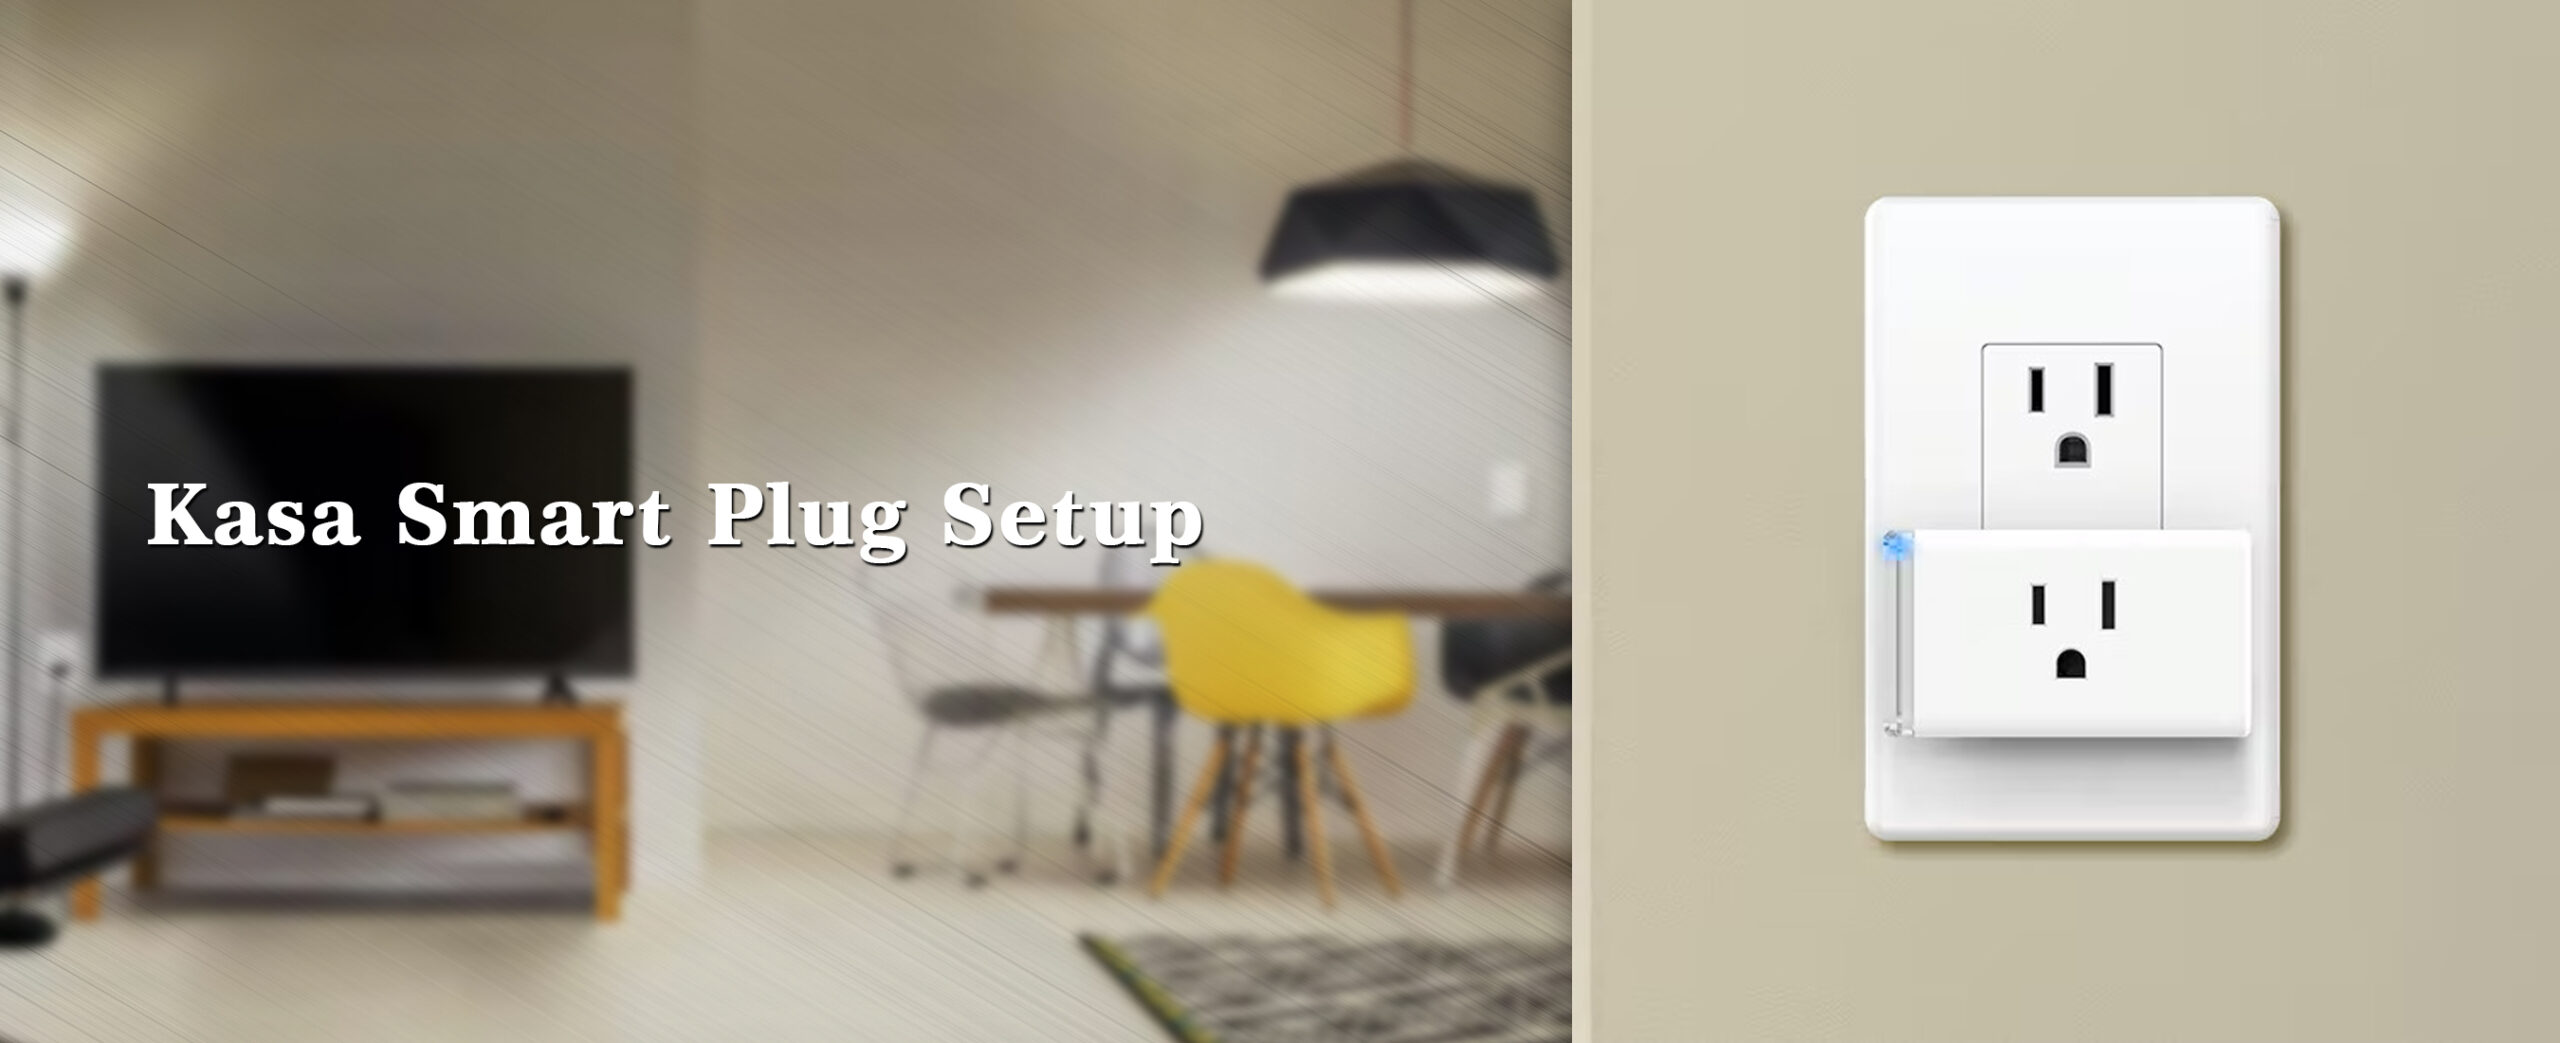 How To Setup Kasa Smart Plug? - Nerd Plus Art